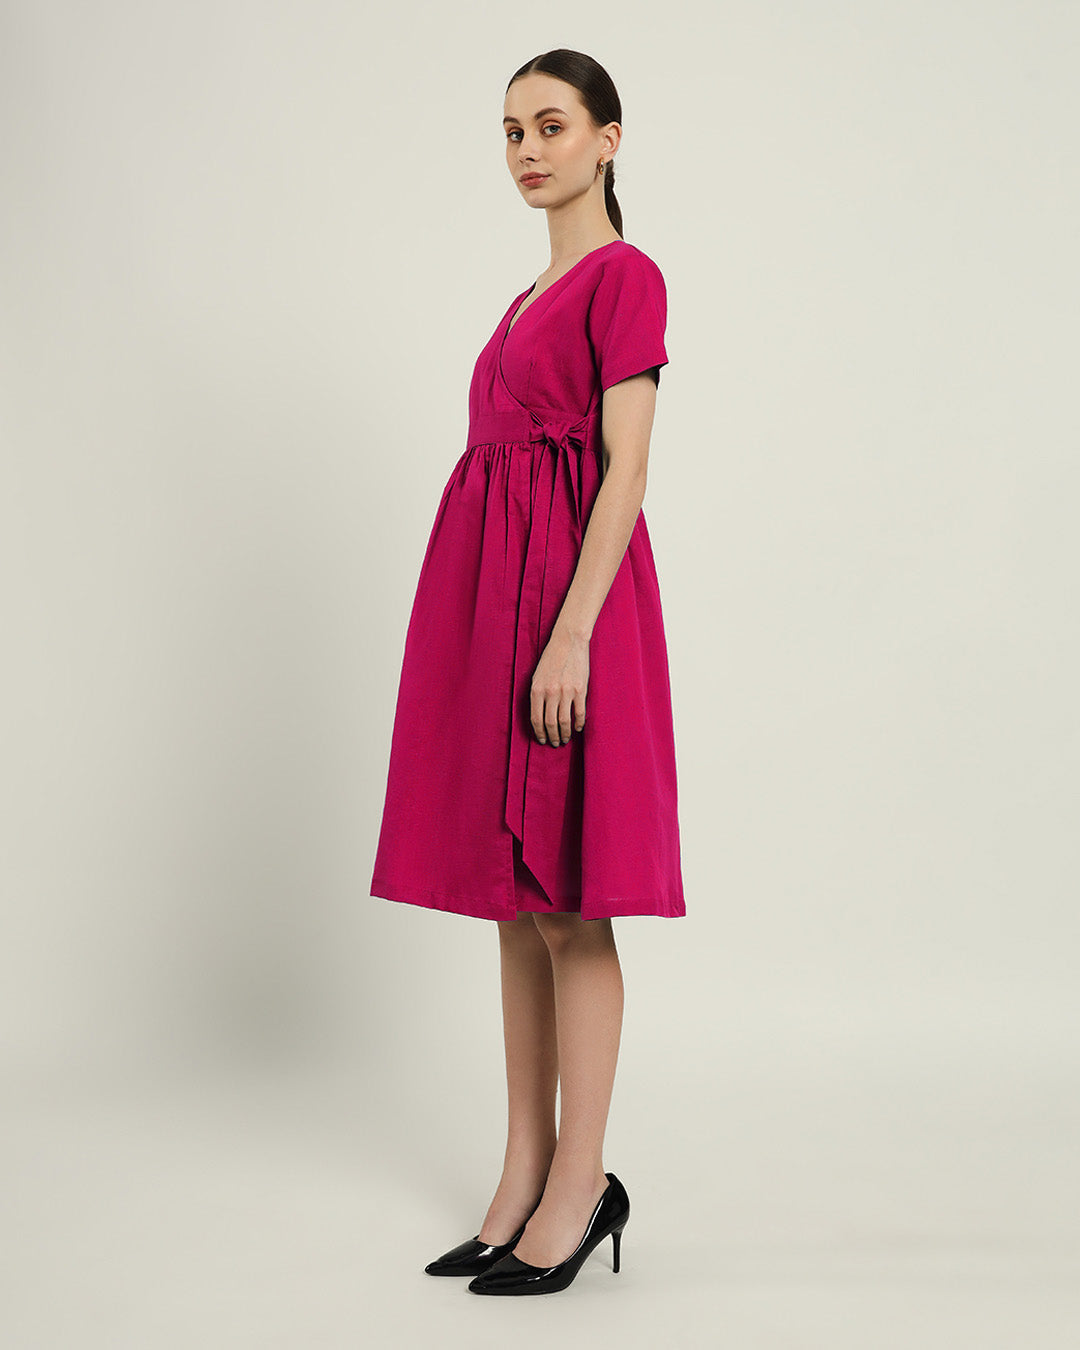 The Miyoshi Berry Cotton Dress